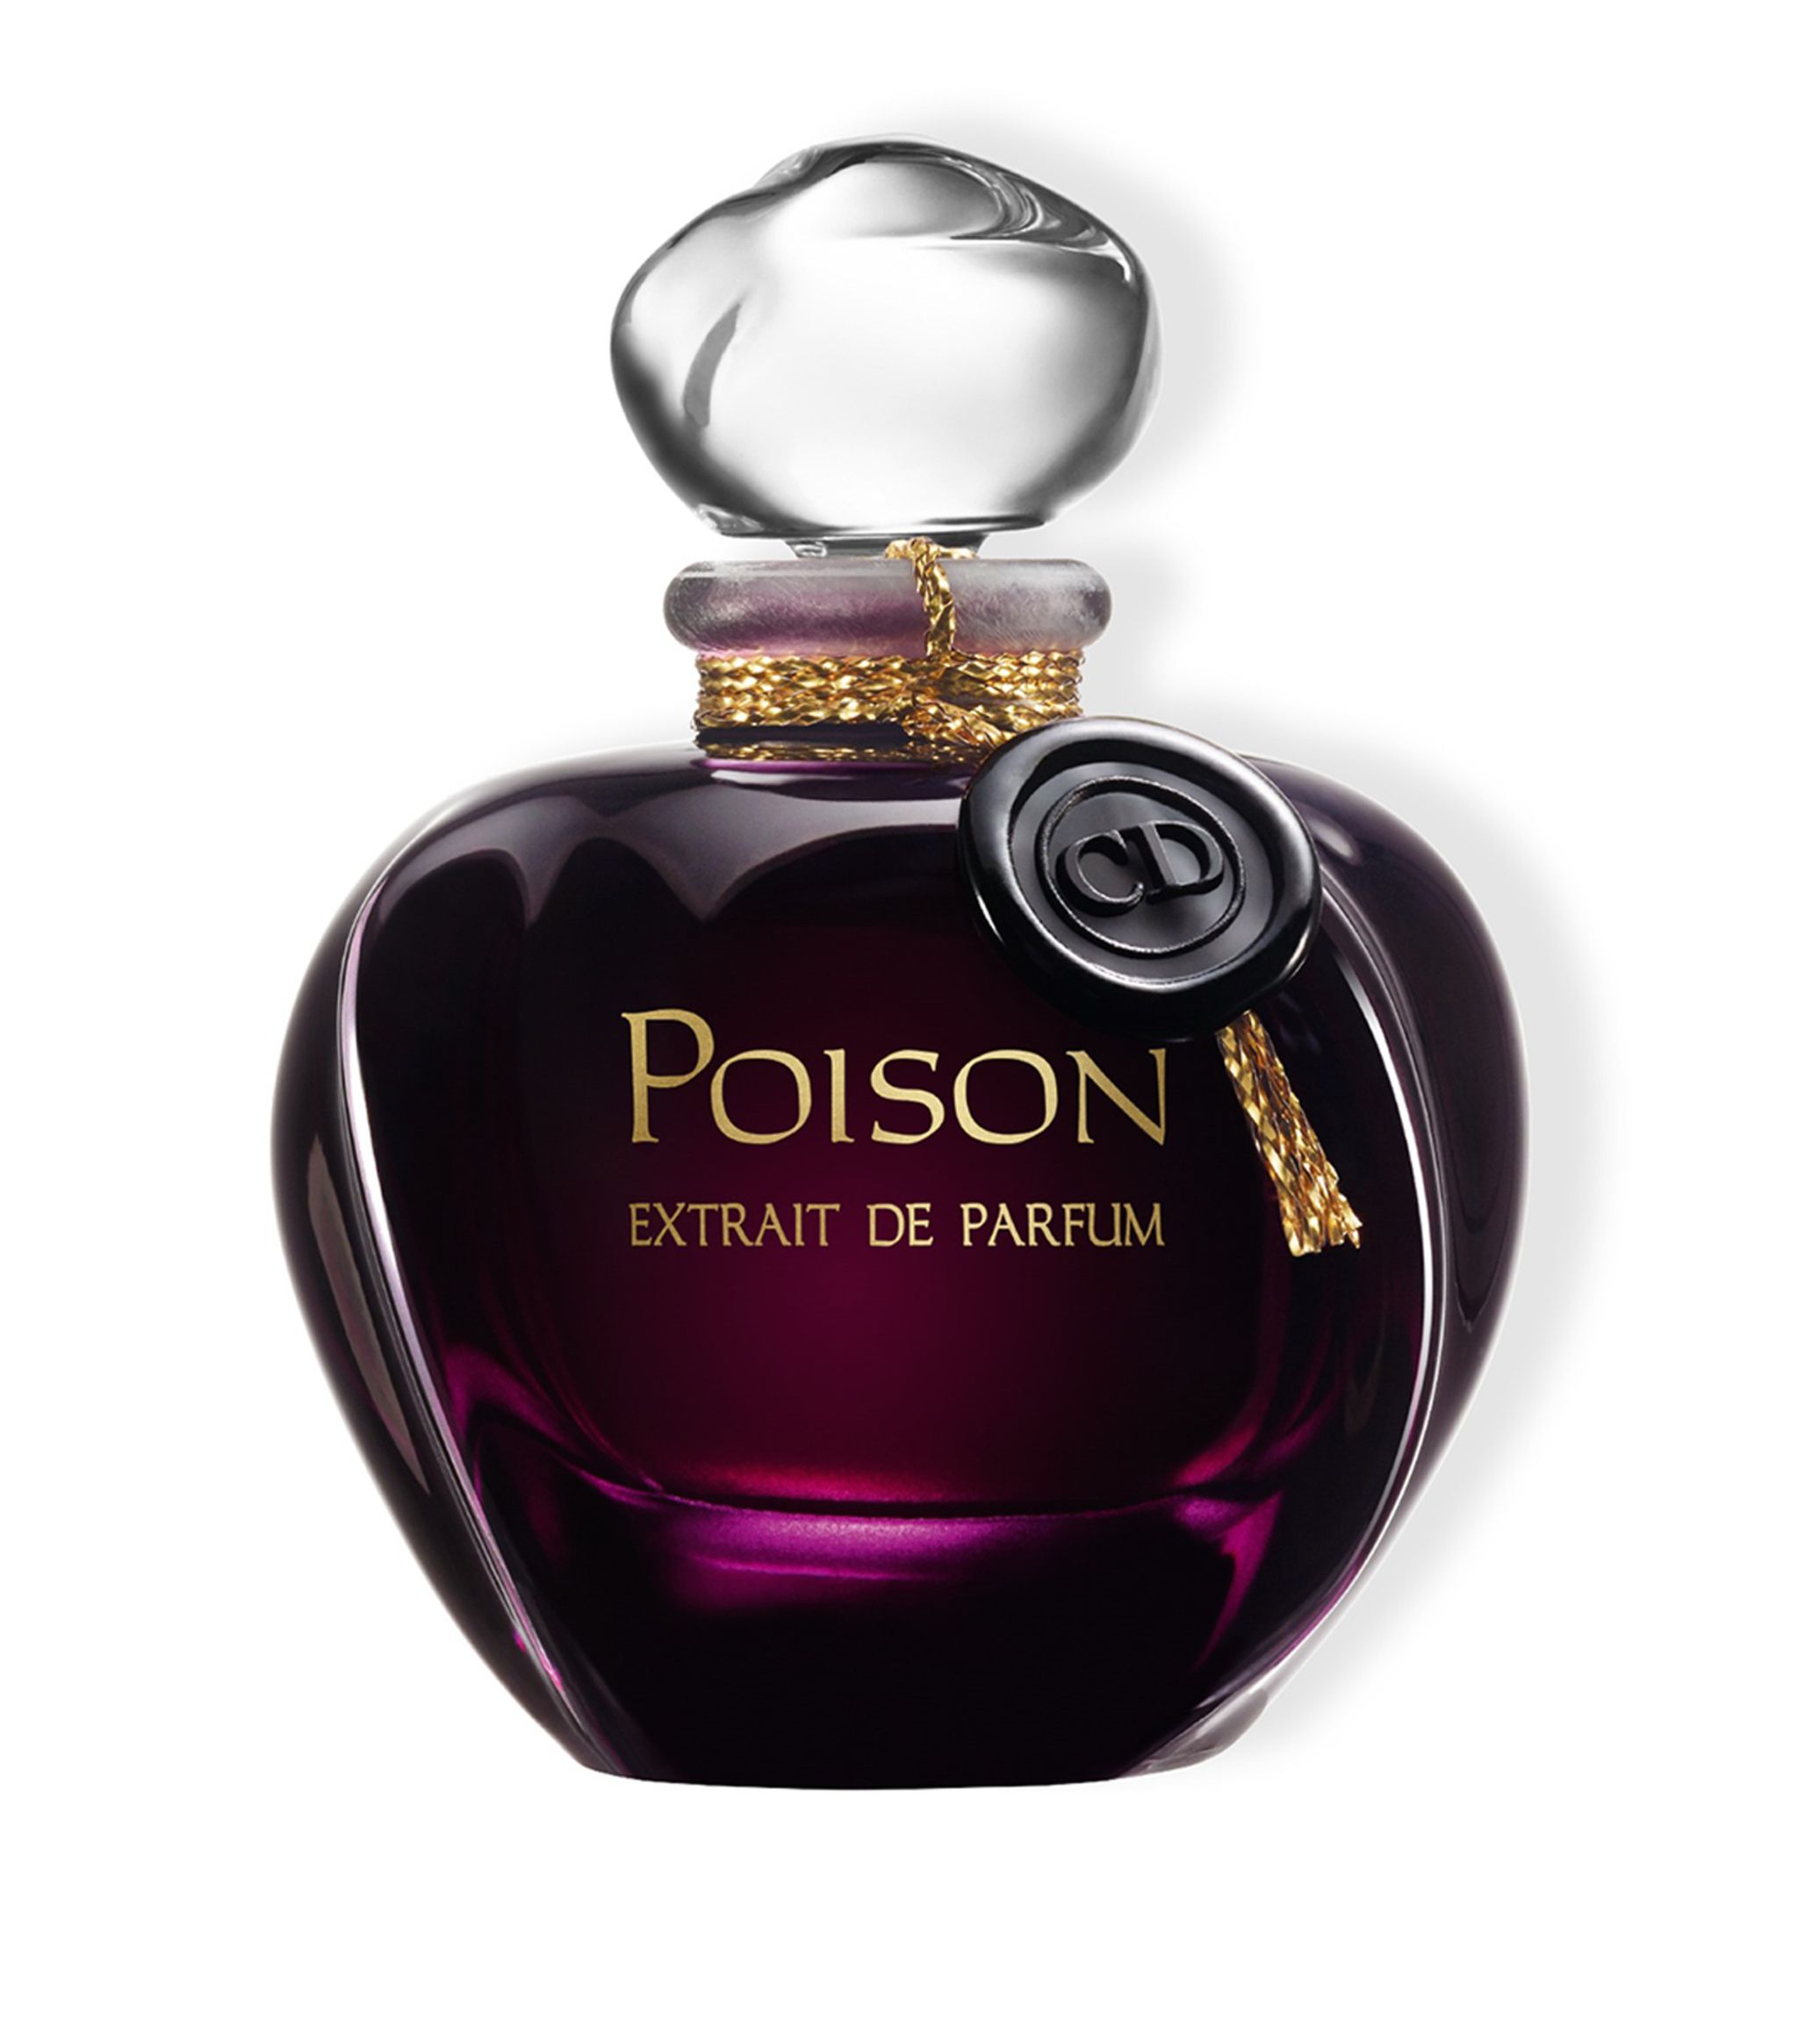 Poison Extrait de Parfum Christian Dior perfume - a new fragrance for